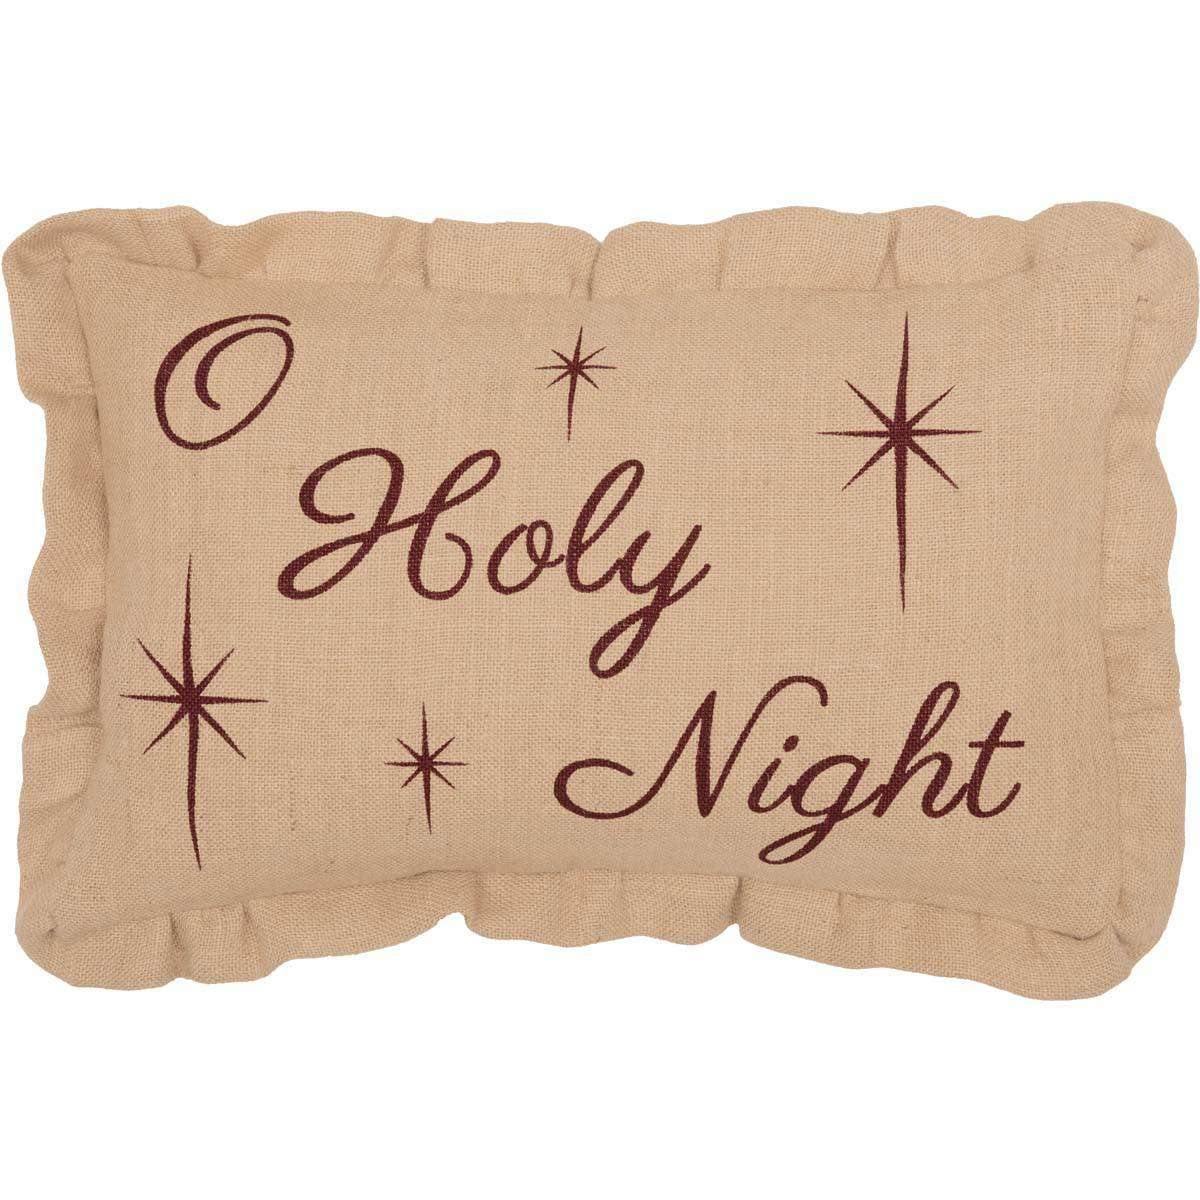 O Holy Night Pillow 14x22 - The Fox Decor